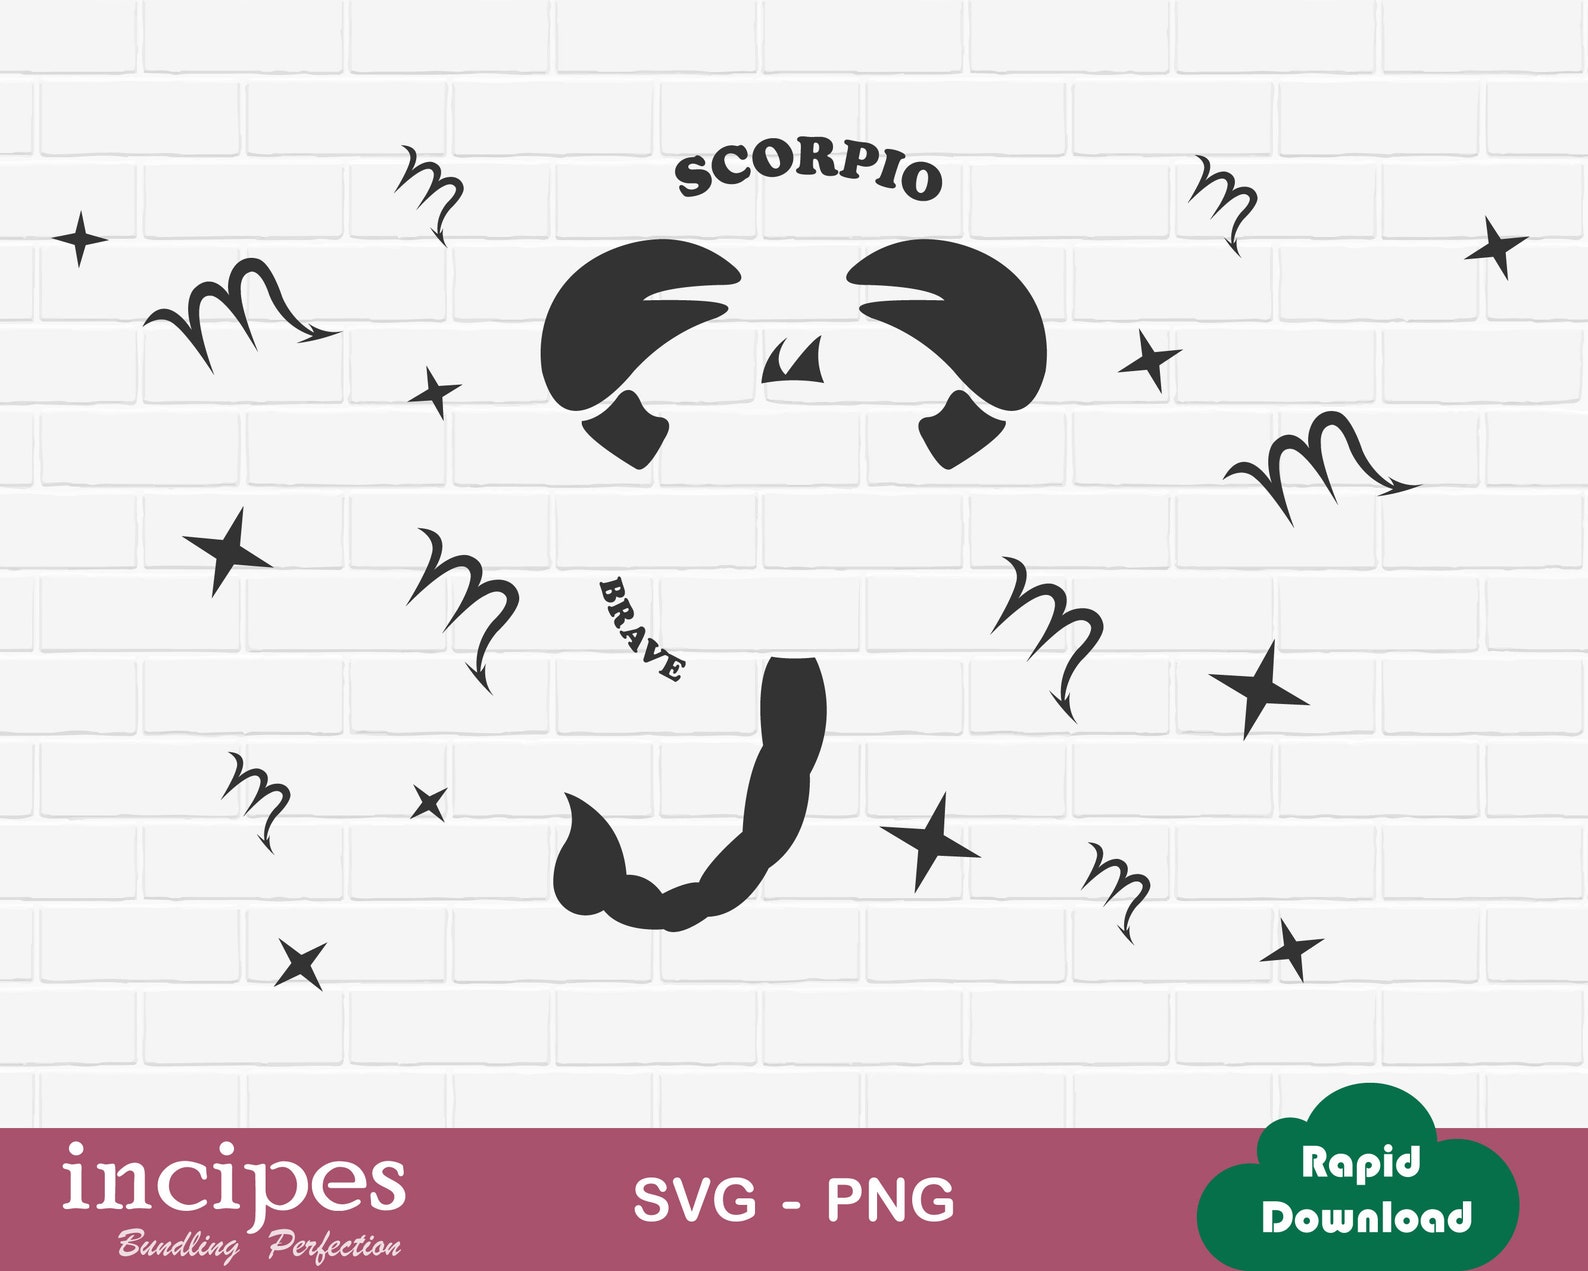 The scorpio logo on a brick wall.